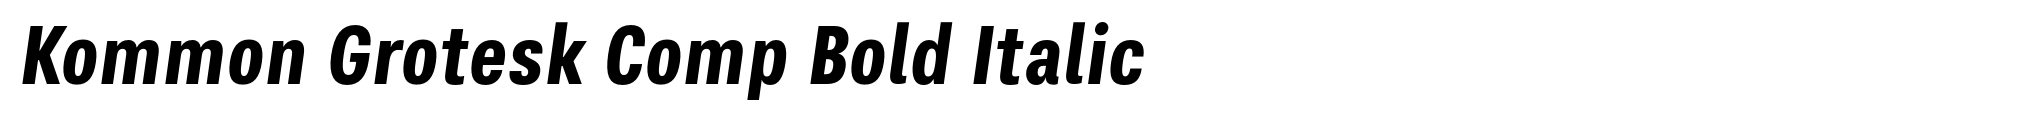 Kommon Grotesk Comp Bold Italic image